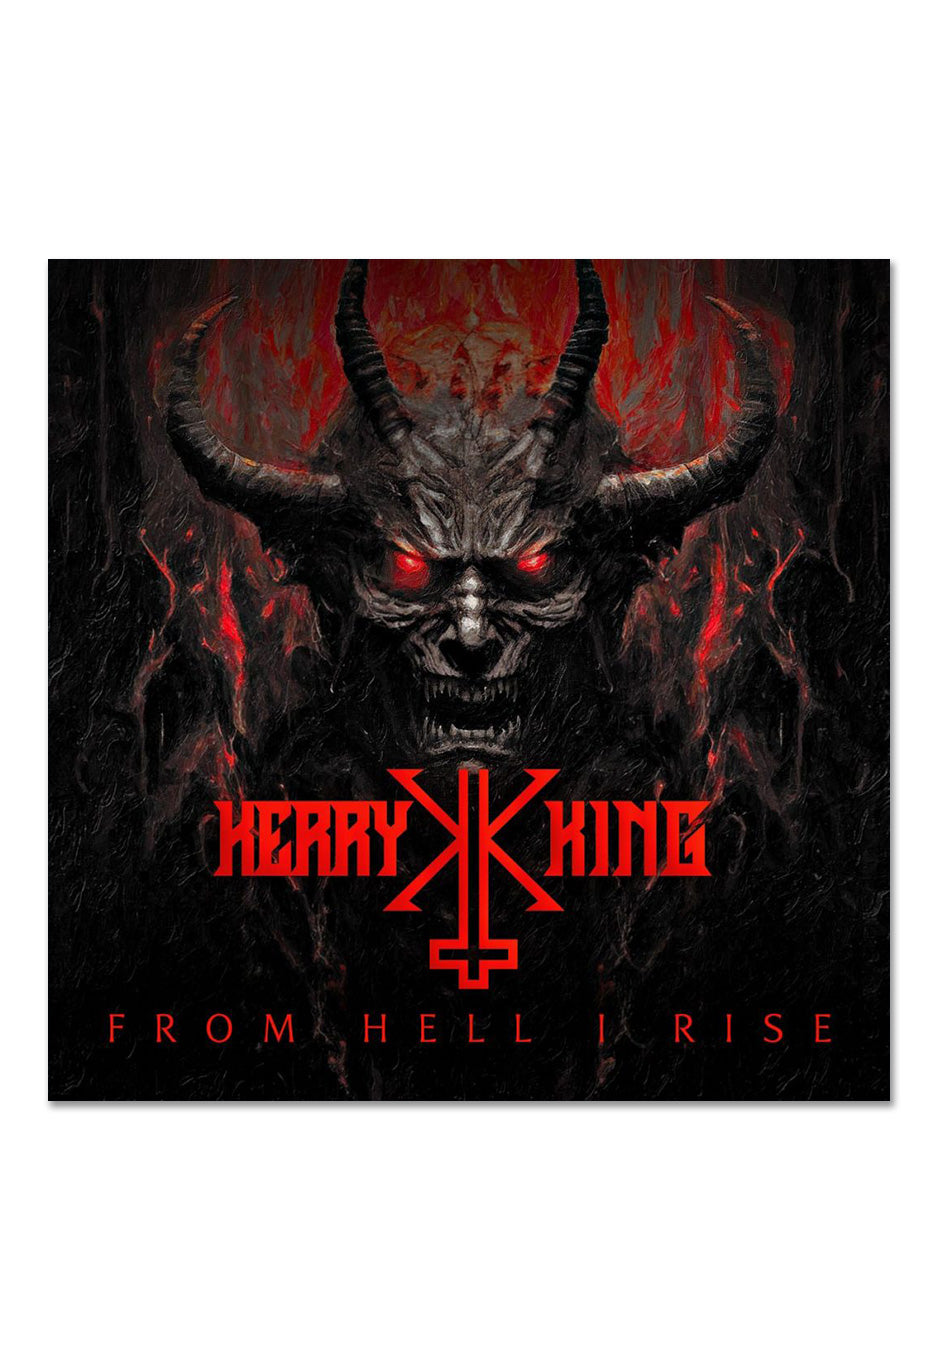 Kerry King - From Hell I Rise Ltd. Dark Red/Orange - Marbled Vinyl